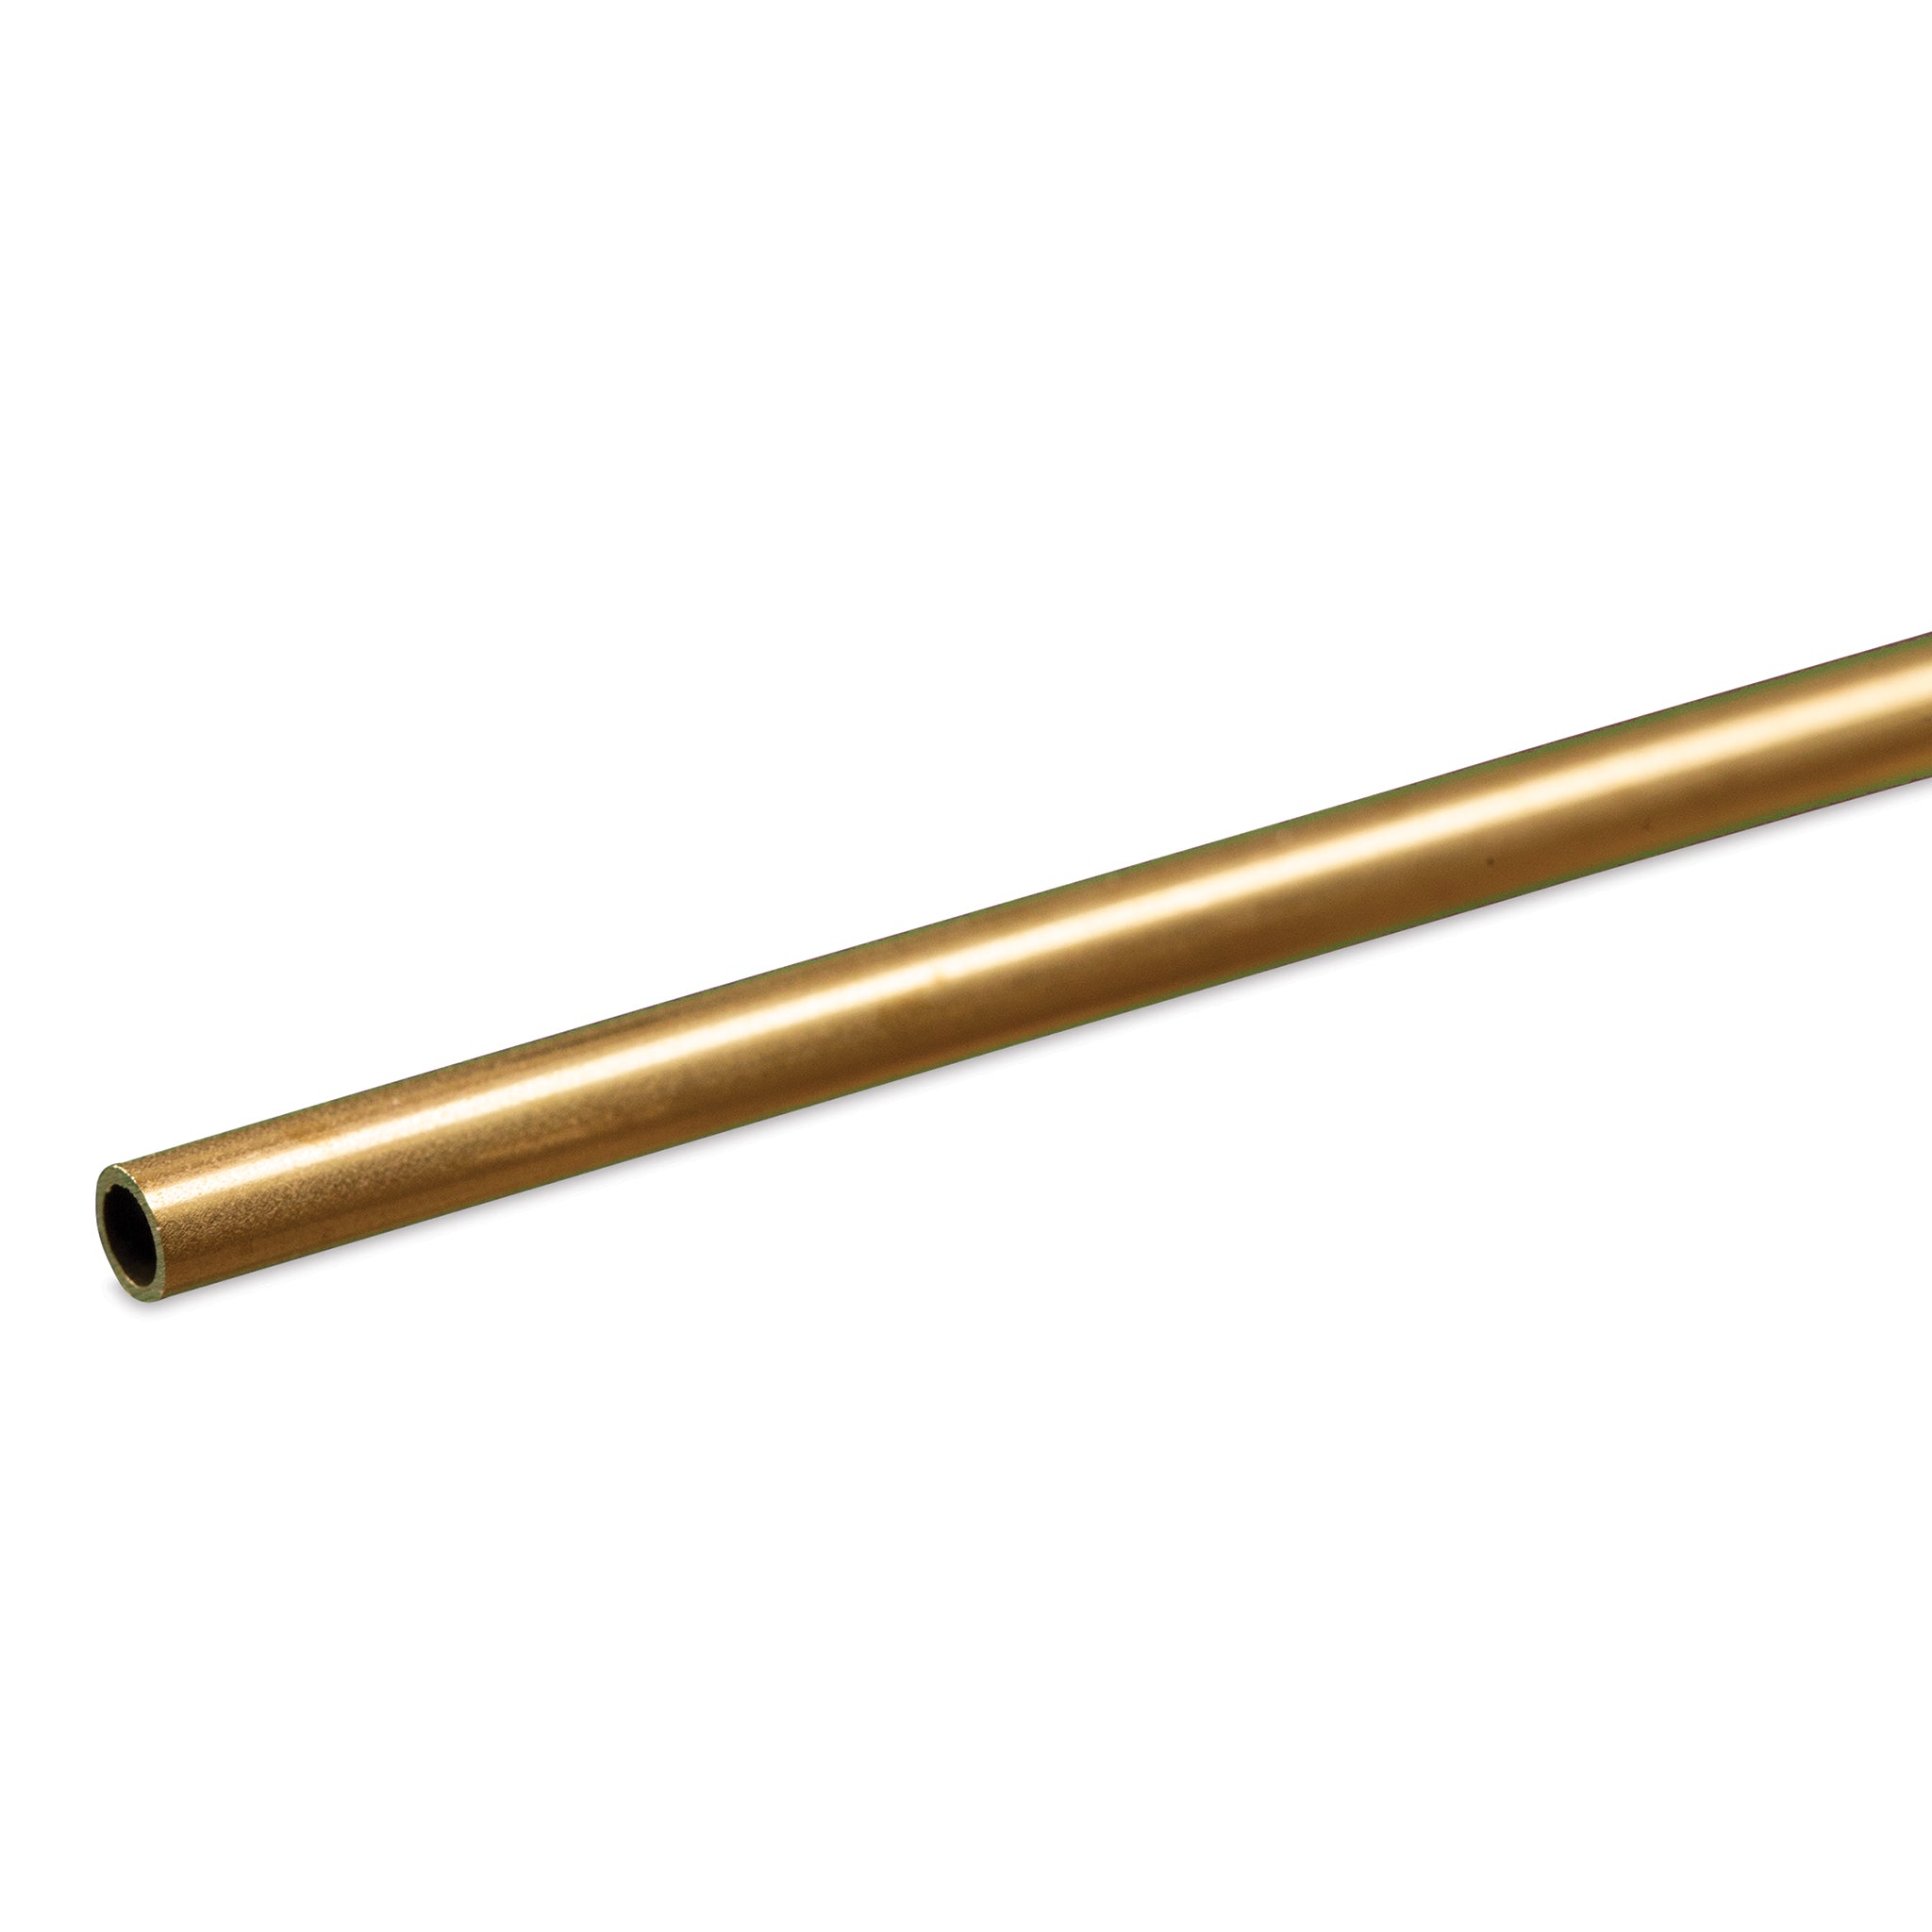 K&S Metals 8127 Round Brass Tube 1/8" OD x 0.014" Wall x 12" Long (1 Piece)